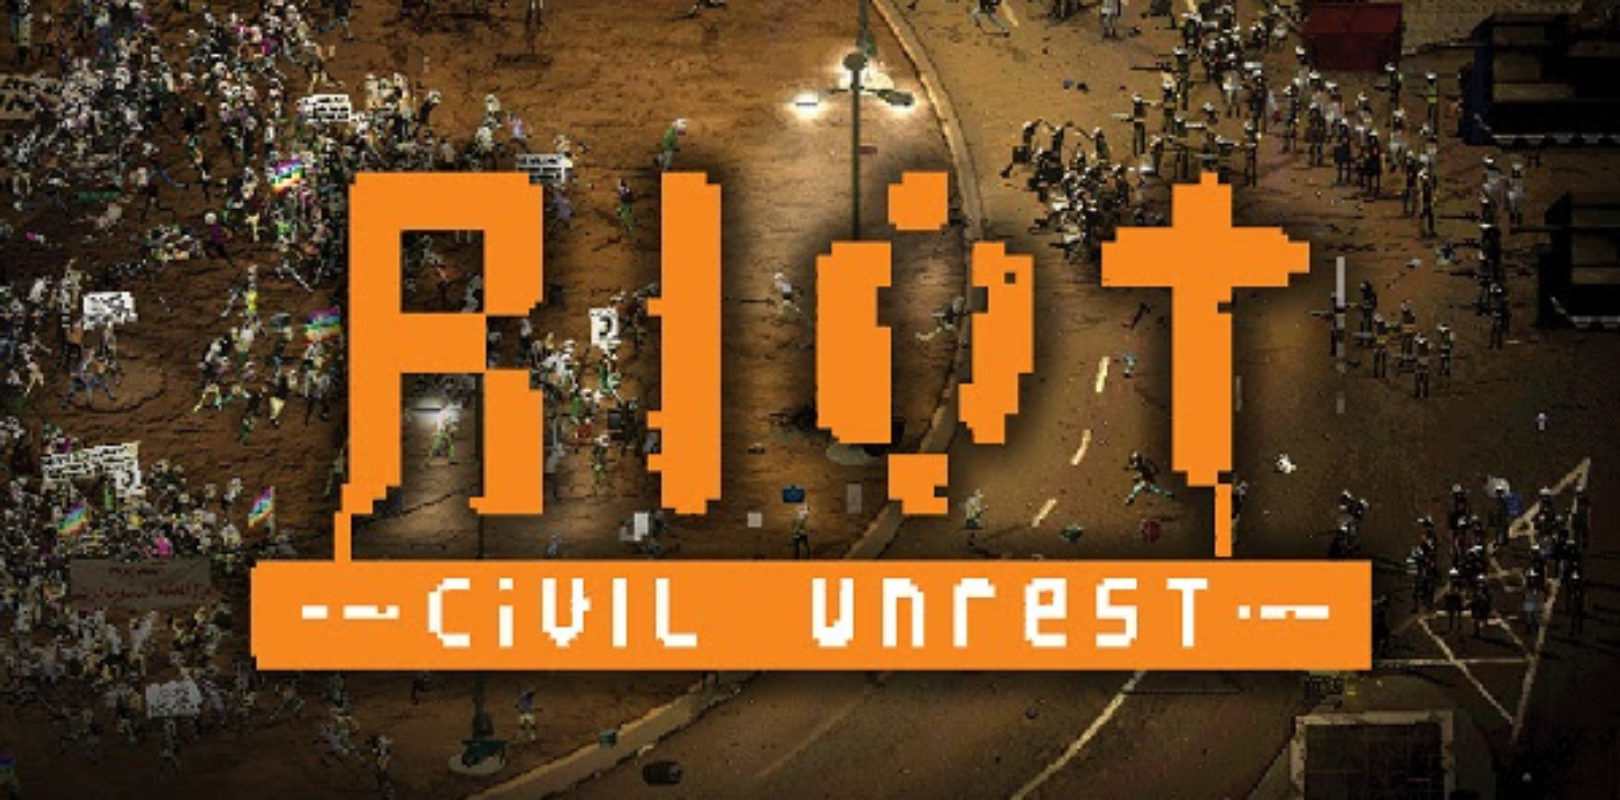 Riot Civil Unrest